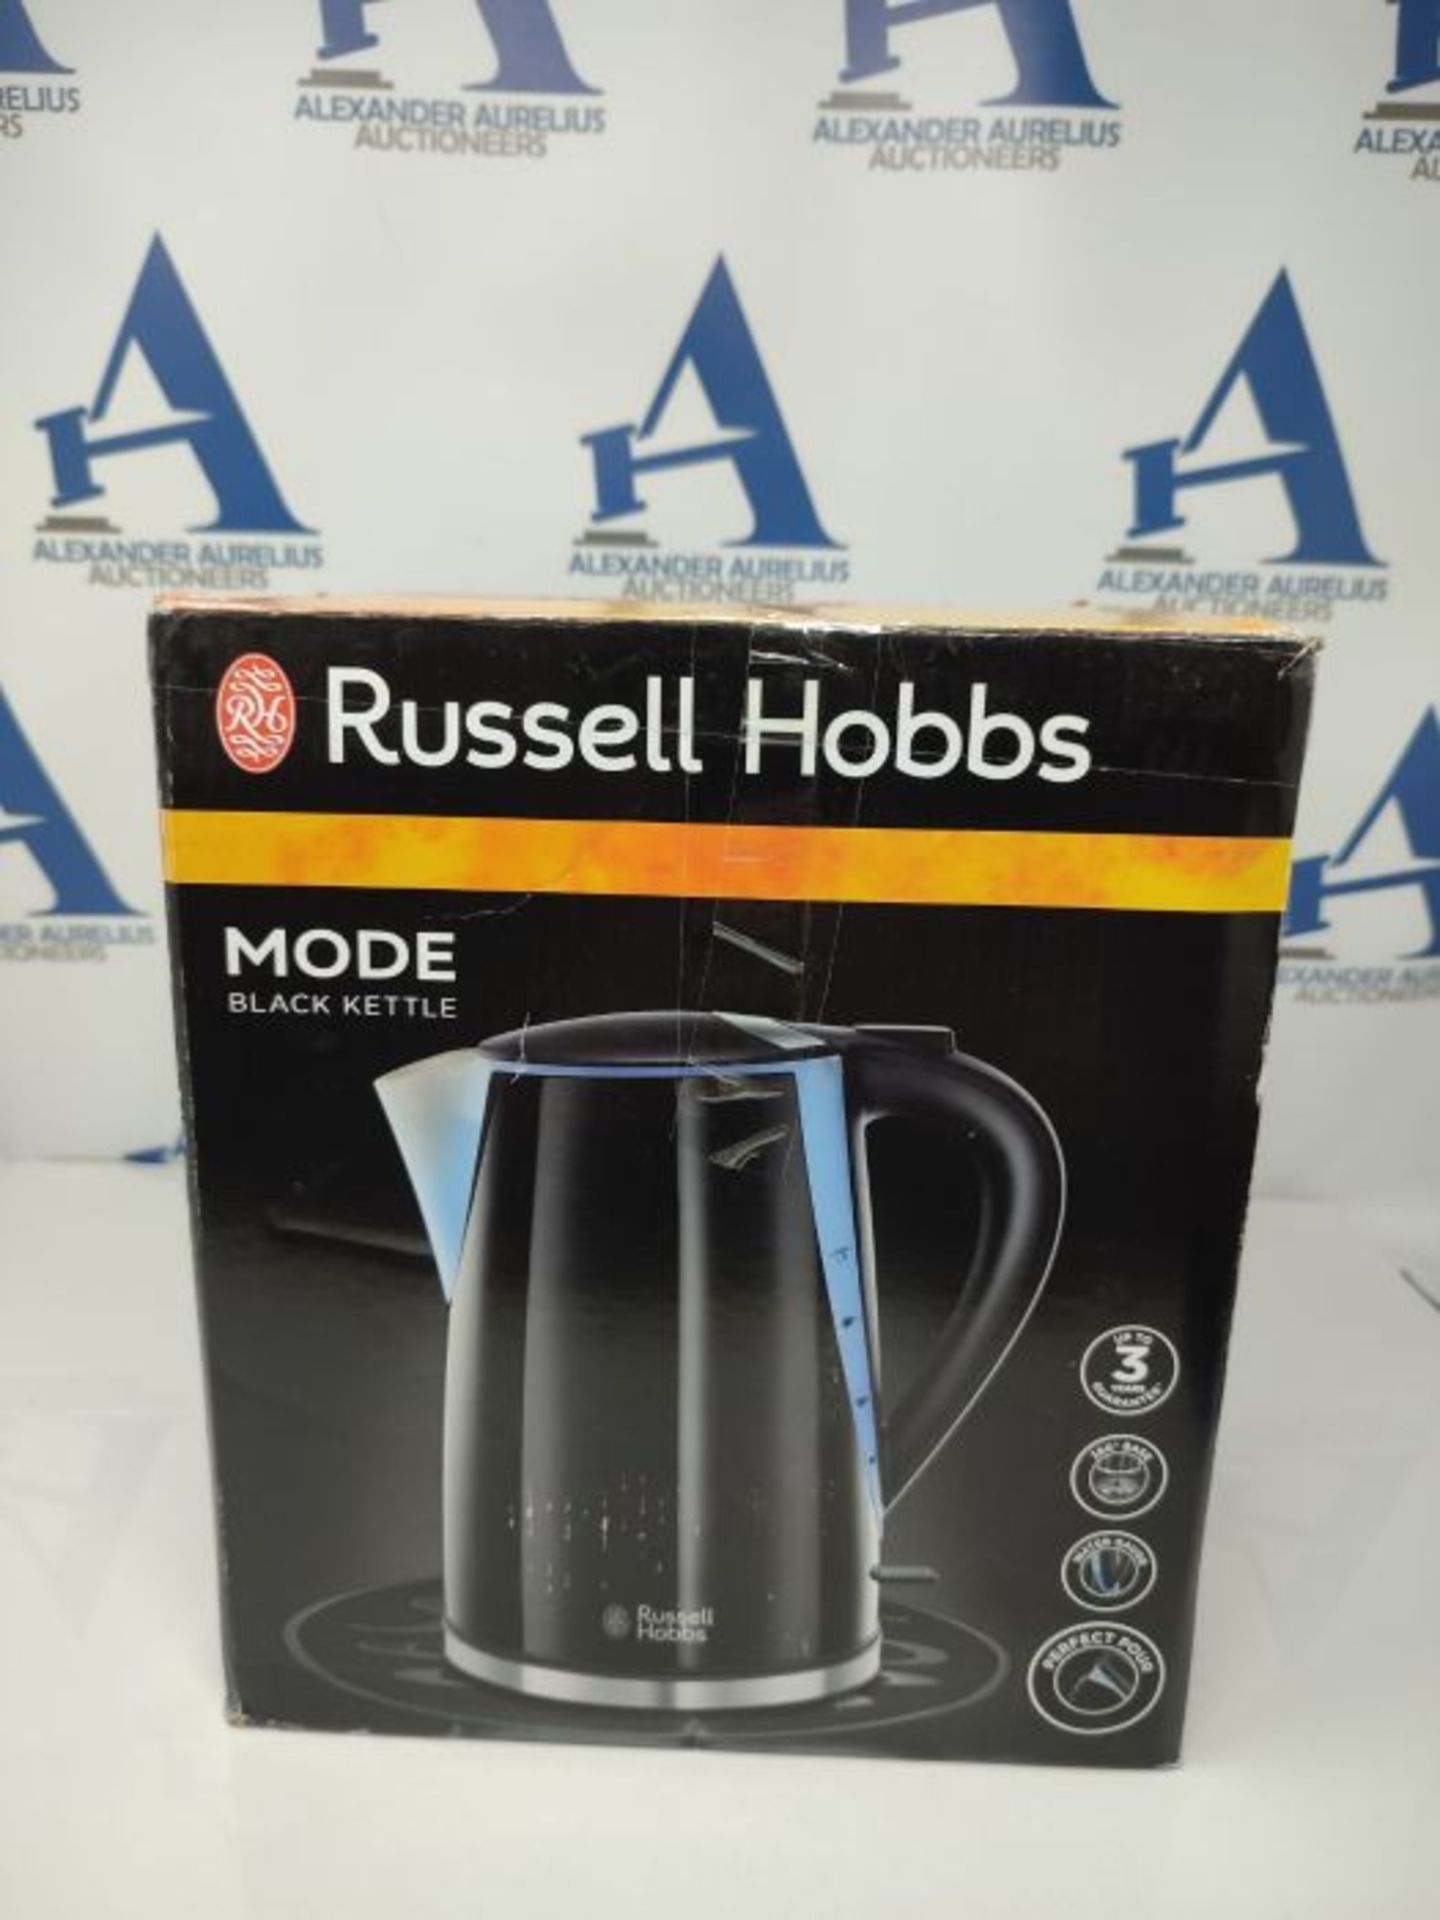 Russell Hobbs Mode Kettle 21400 - Black - Image 2 of 3